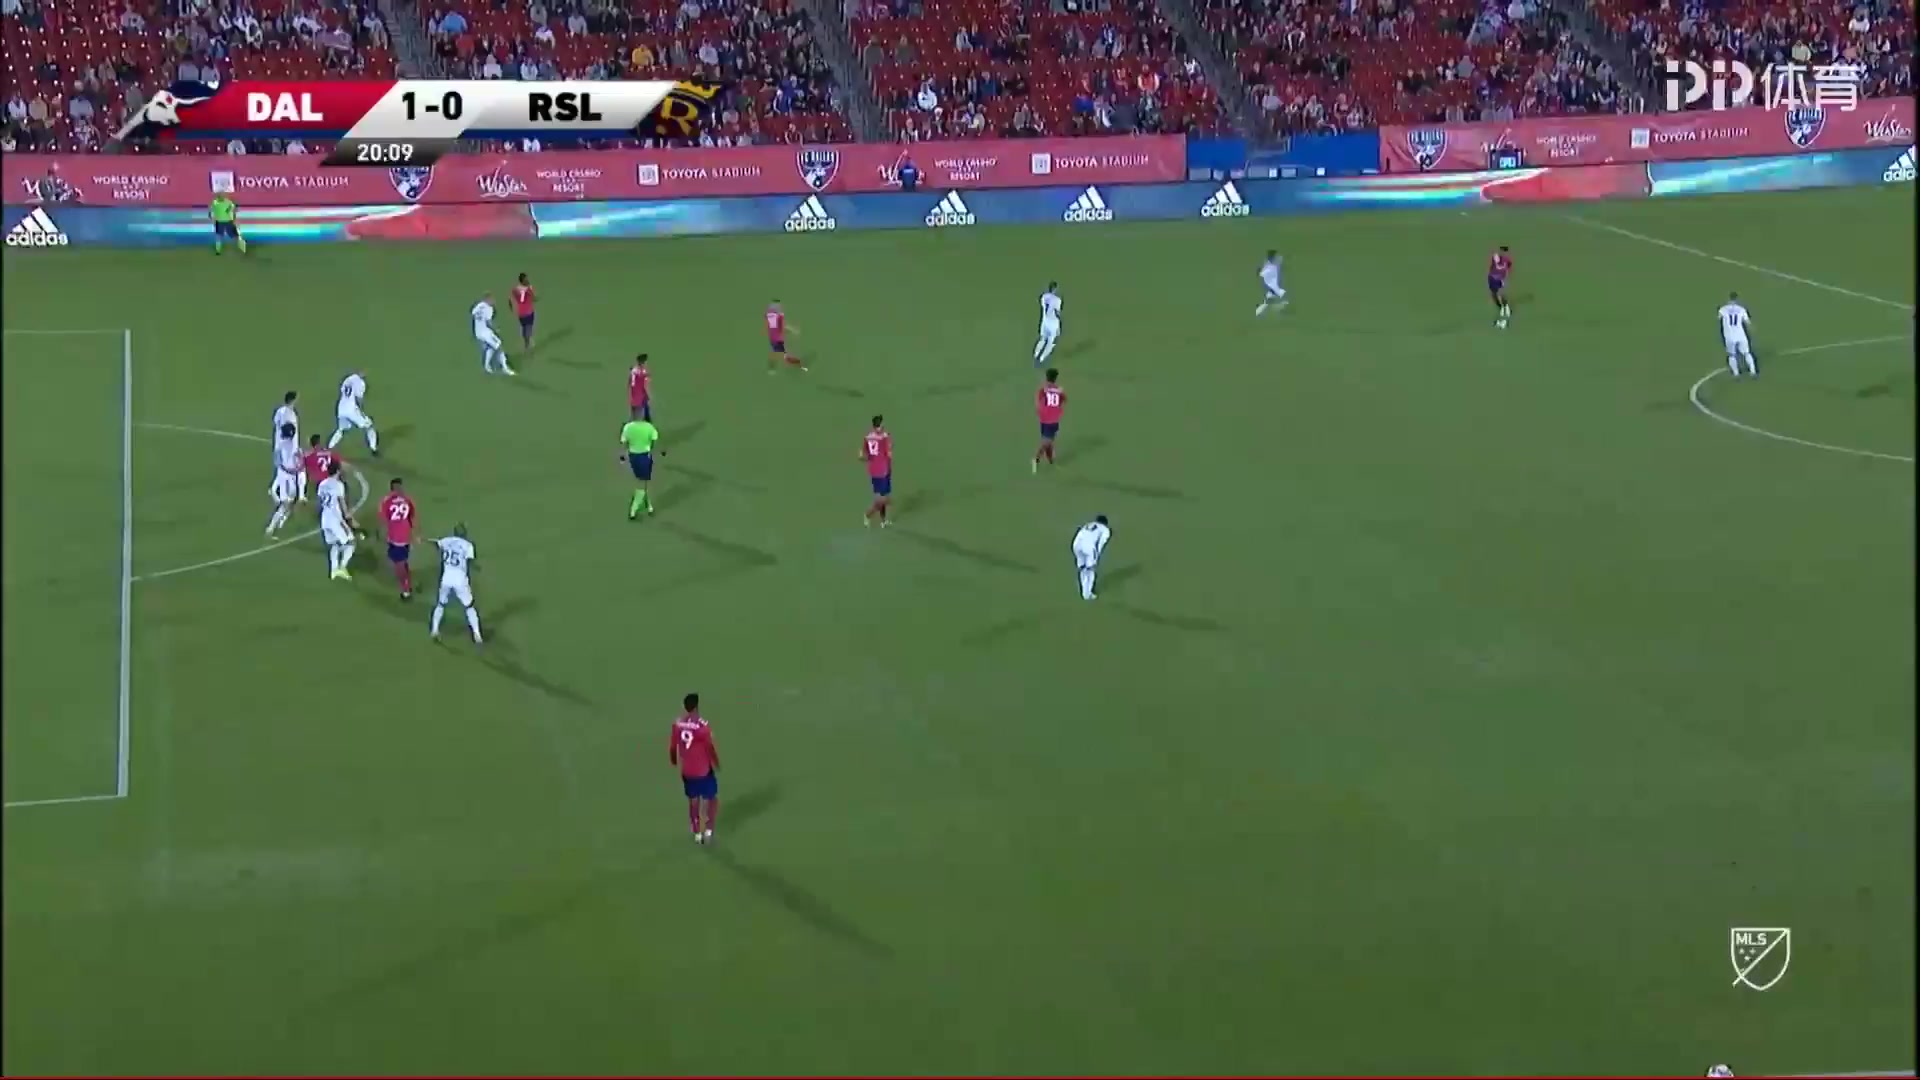 MLS FC Dallas Vs Real Salt Lake Matt Hedges Goal in 19 min, Score 1:0